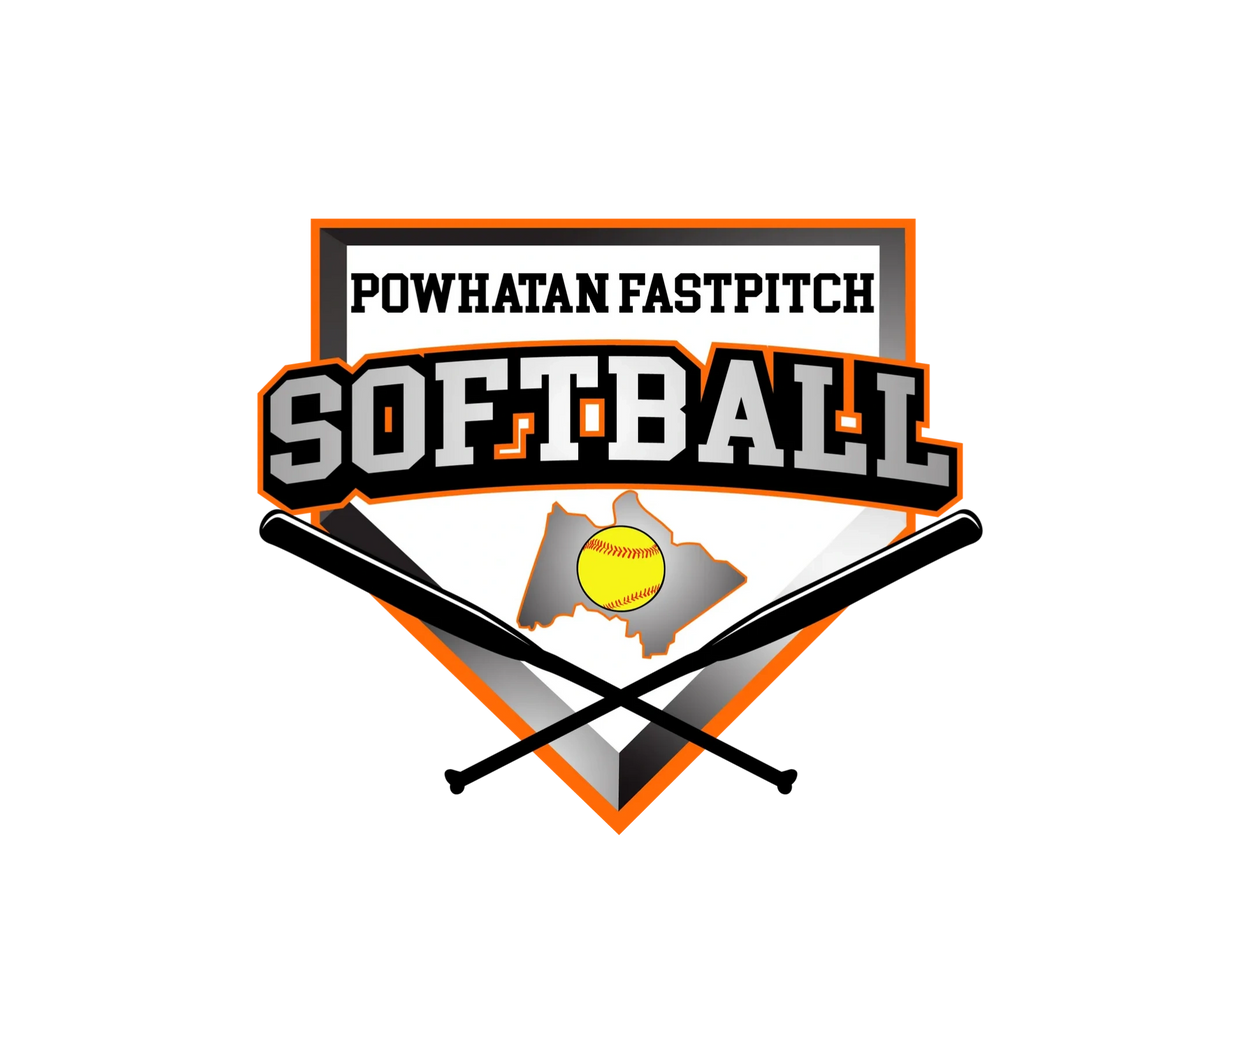 Powhatan Fastpitch Softball Logo. Two baseballs bats one softball outline of Powhatan County